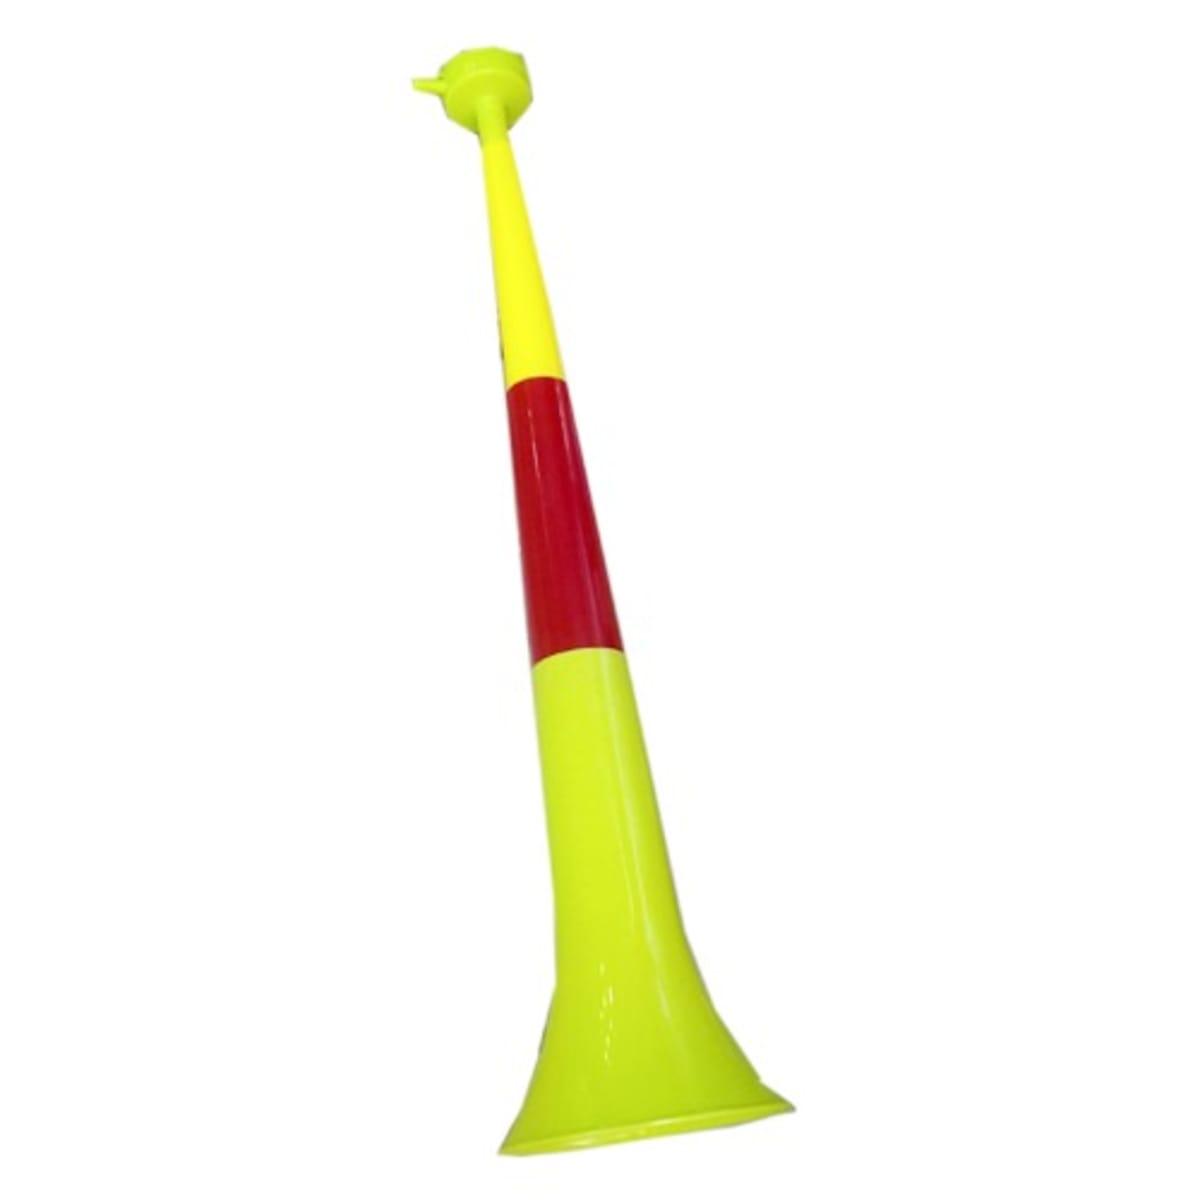 https://www-konga-com-res.cloudinary.com/w_400,f_auto,fl_lossy,dpr_3.0,q_auto/media/catalog/product/S/p/Sport-Vuvuzela-Horn-6788871_1.jpg